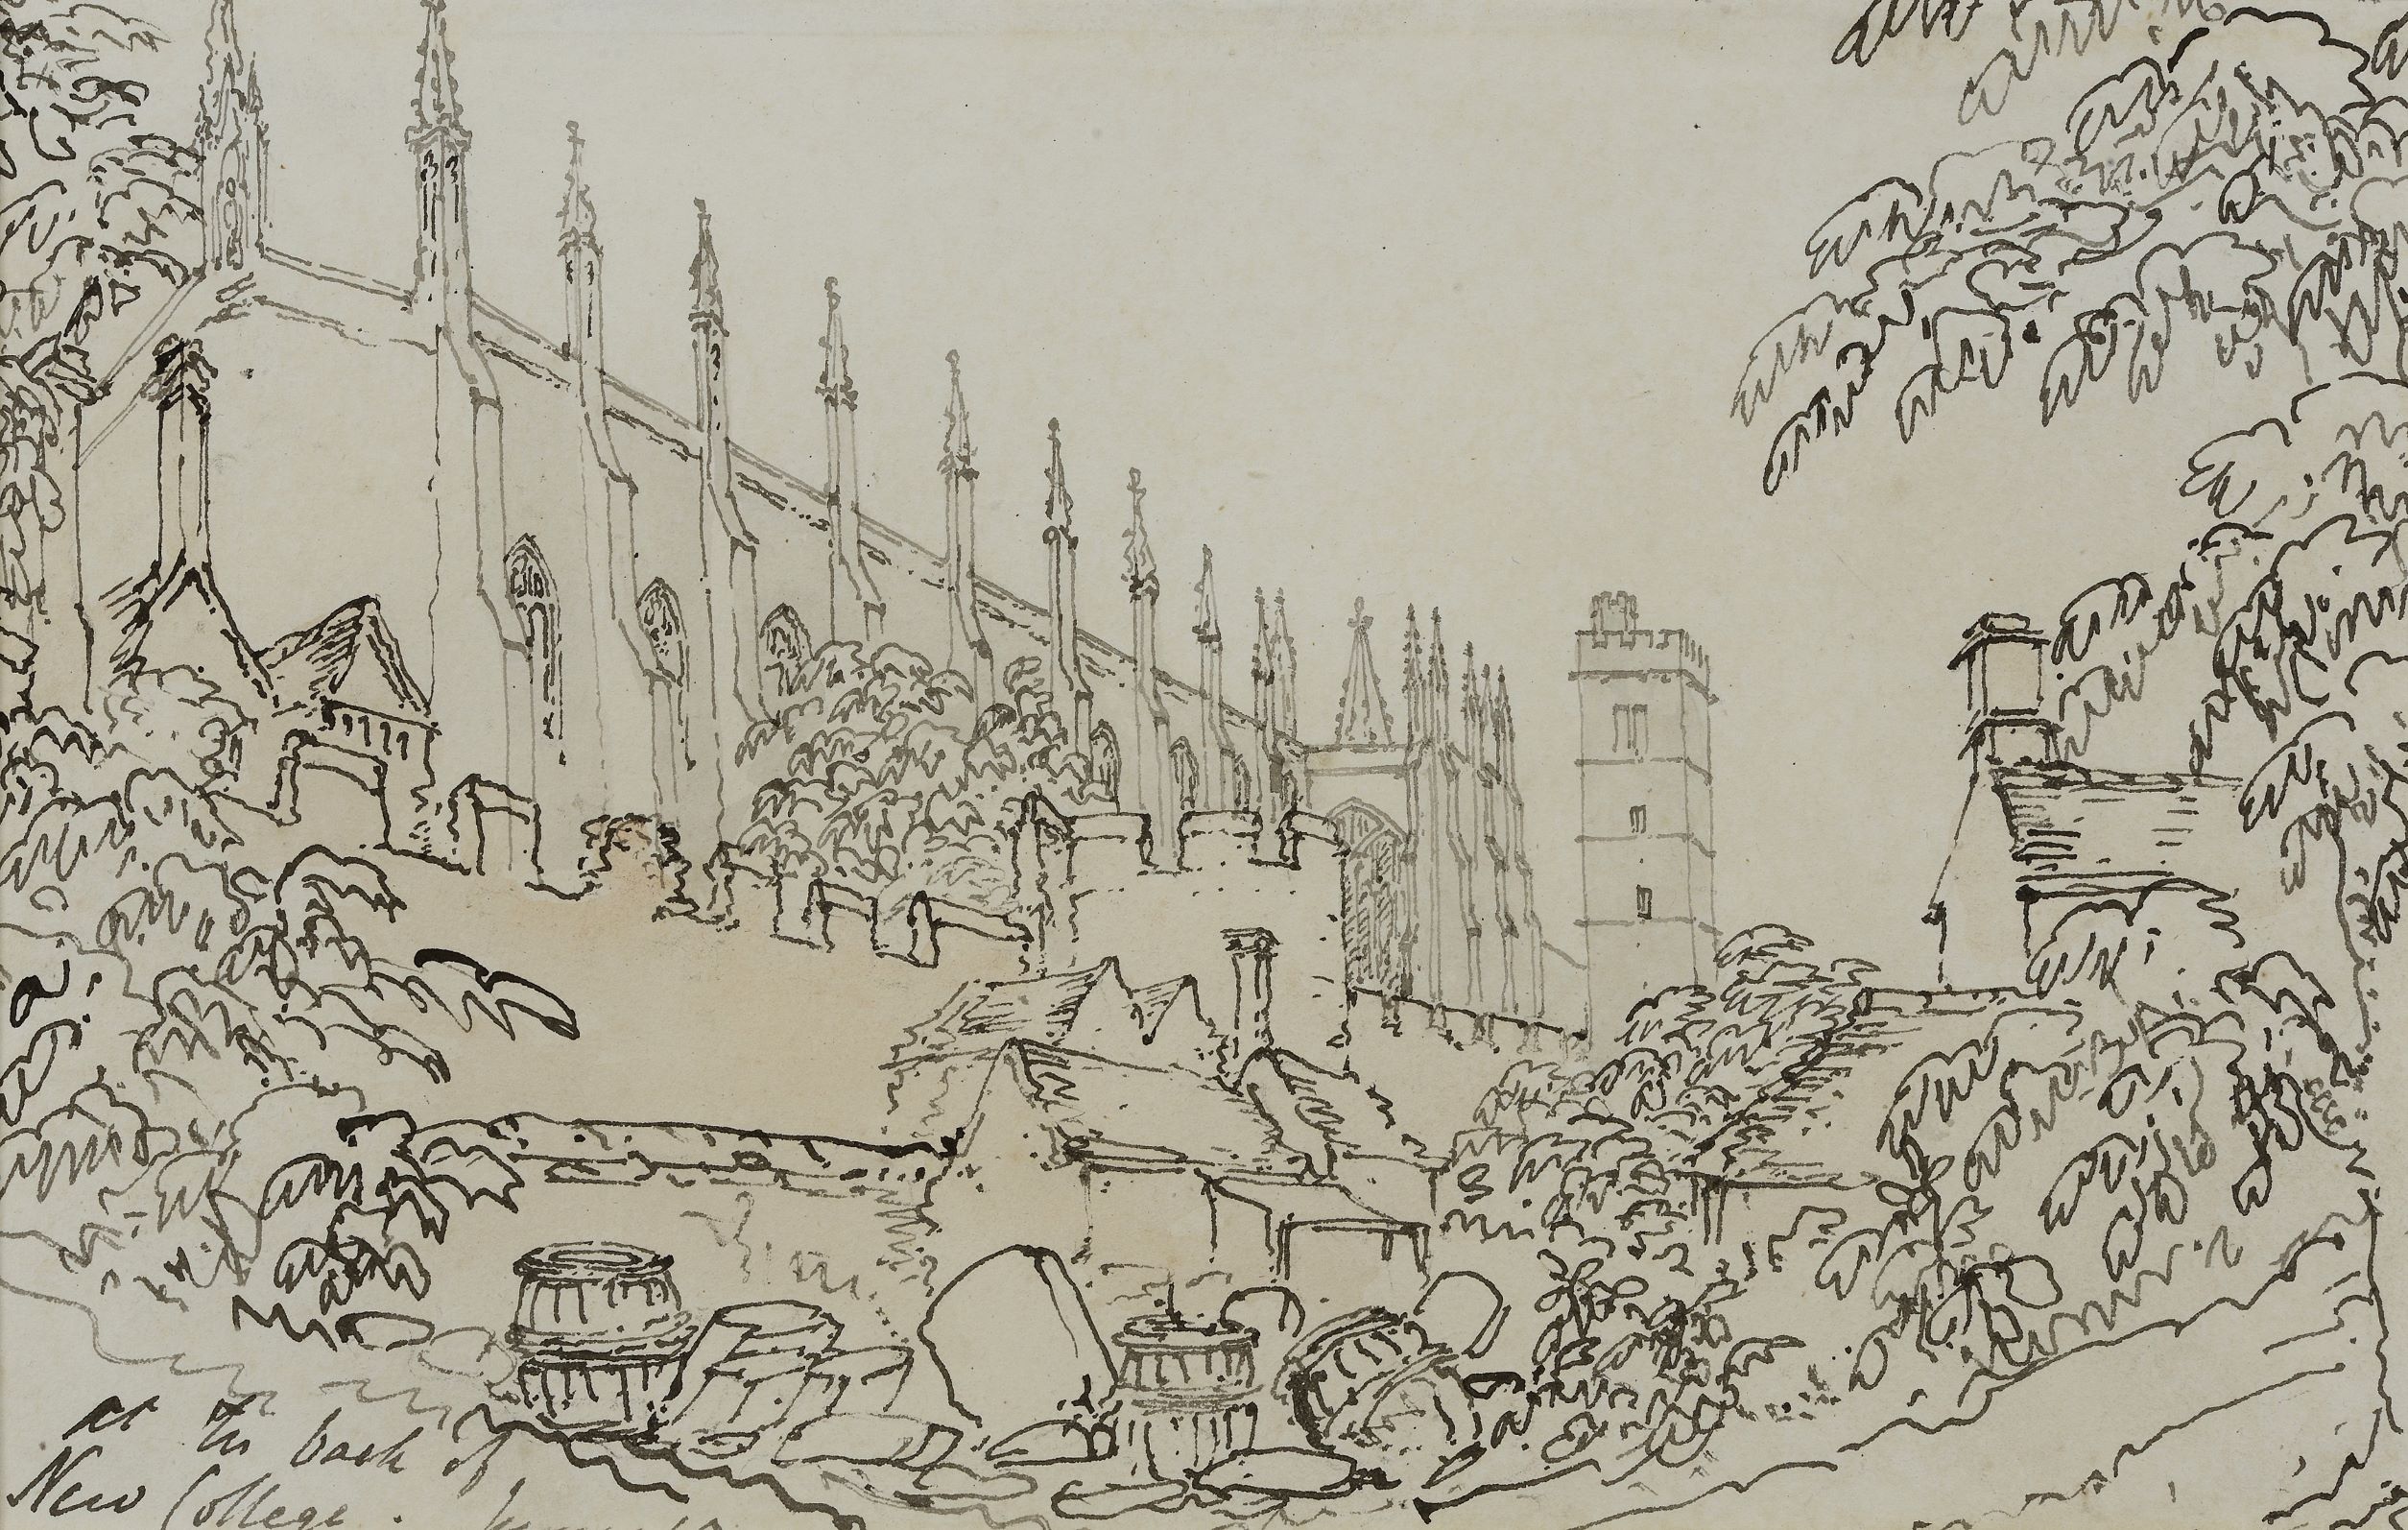 New College; artist: English School; medium: Pen & Ink on Paper; date:1790.